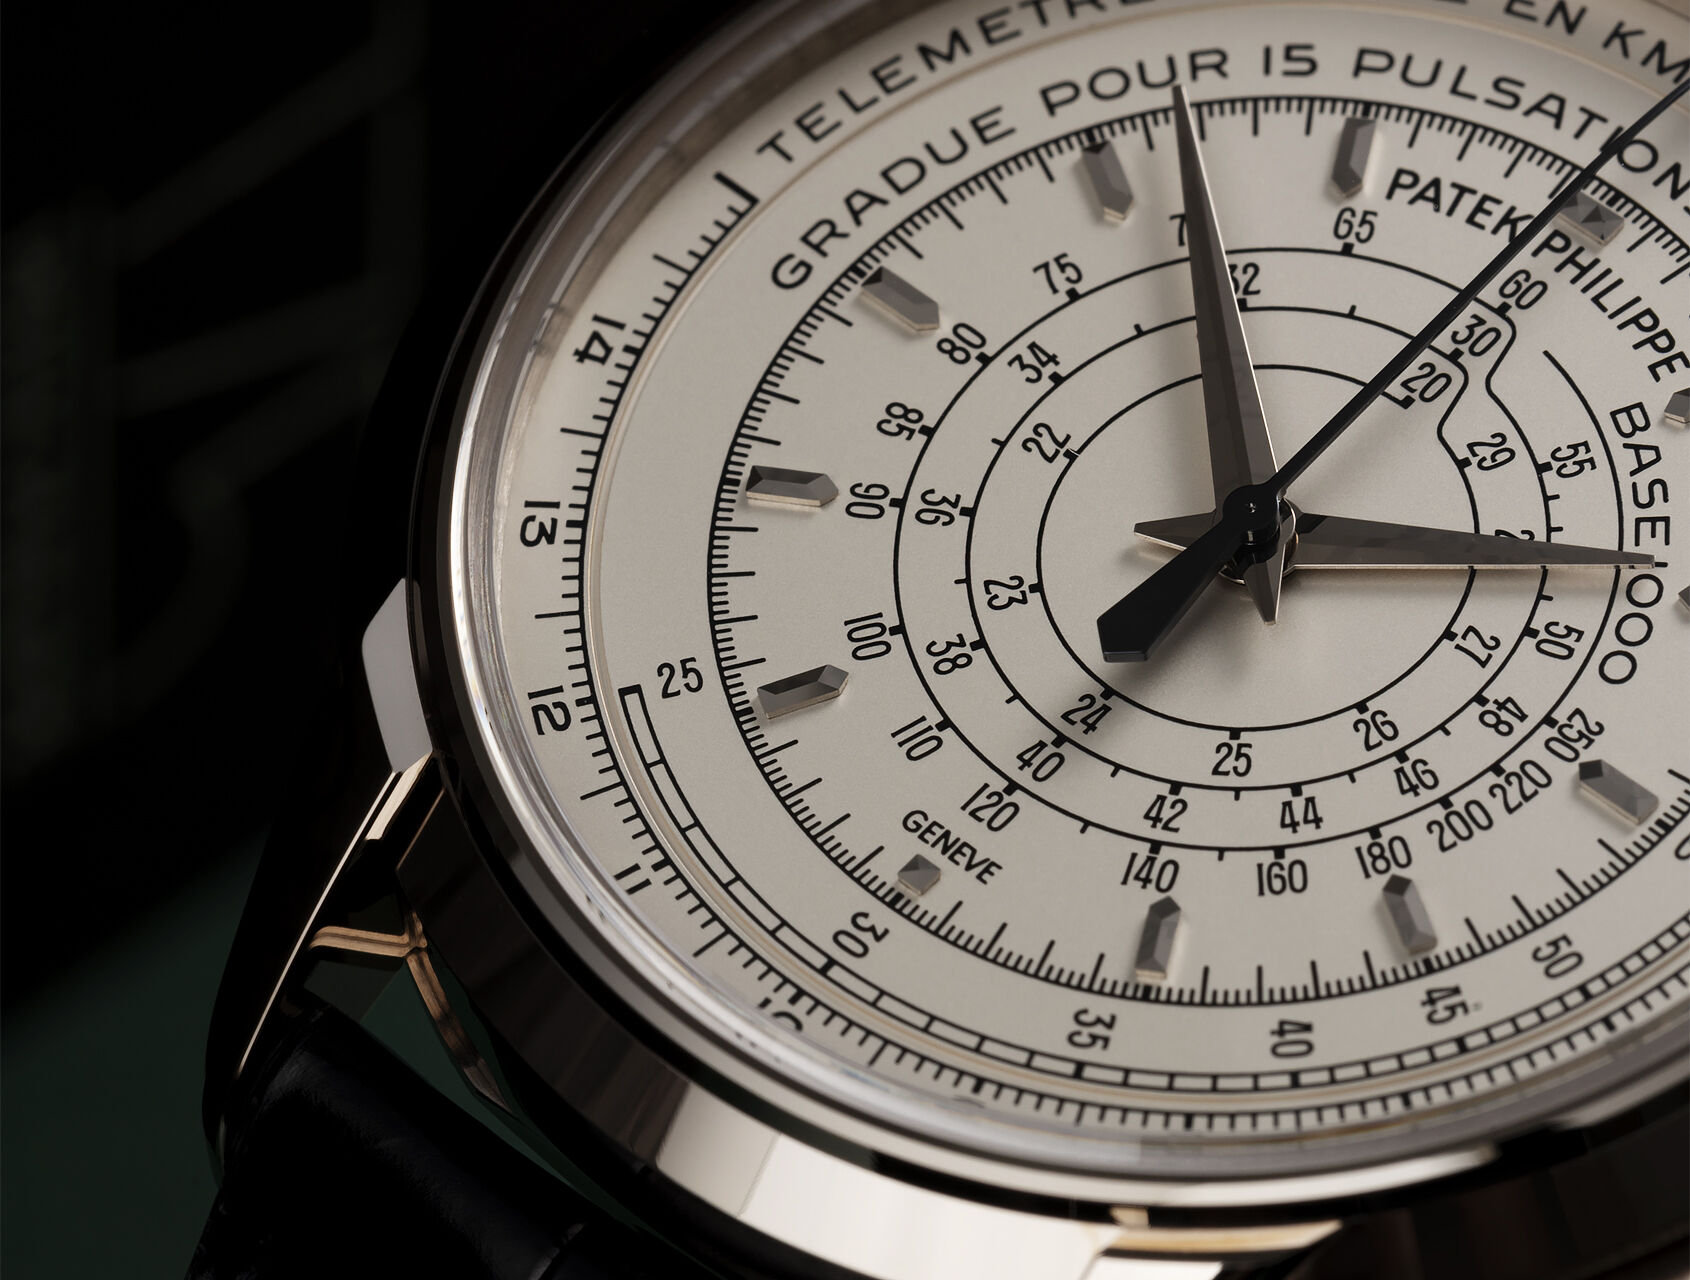 ref 5975G-001 | 175th Anniversary | Patek Philippe Multi-Scale Chronograph